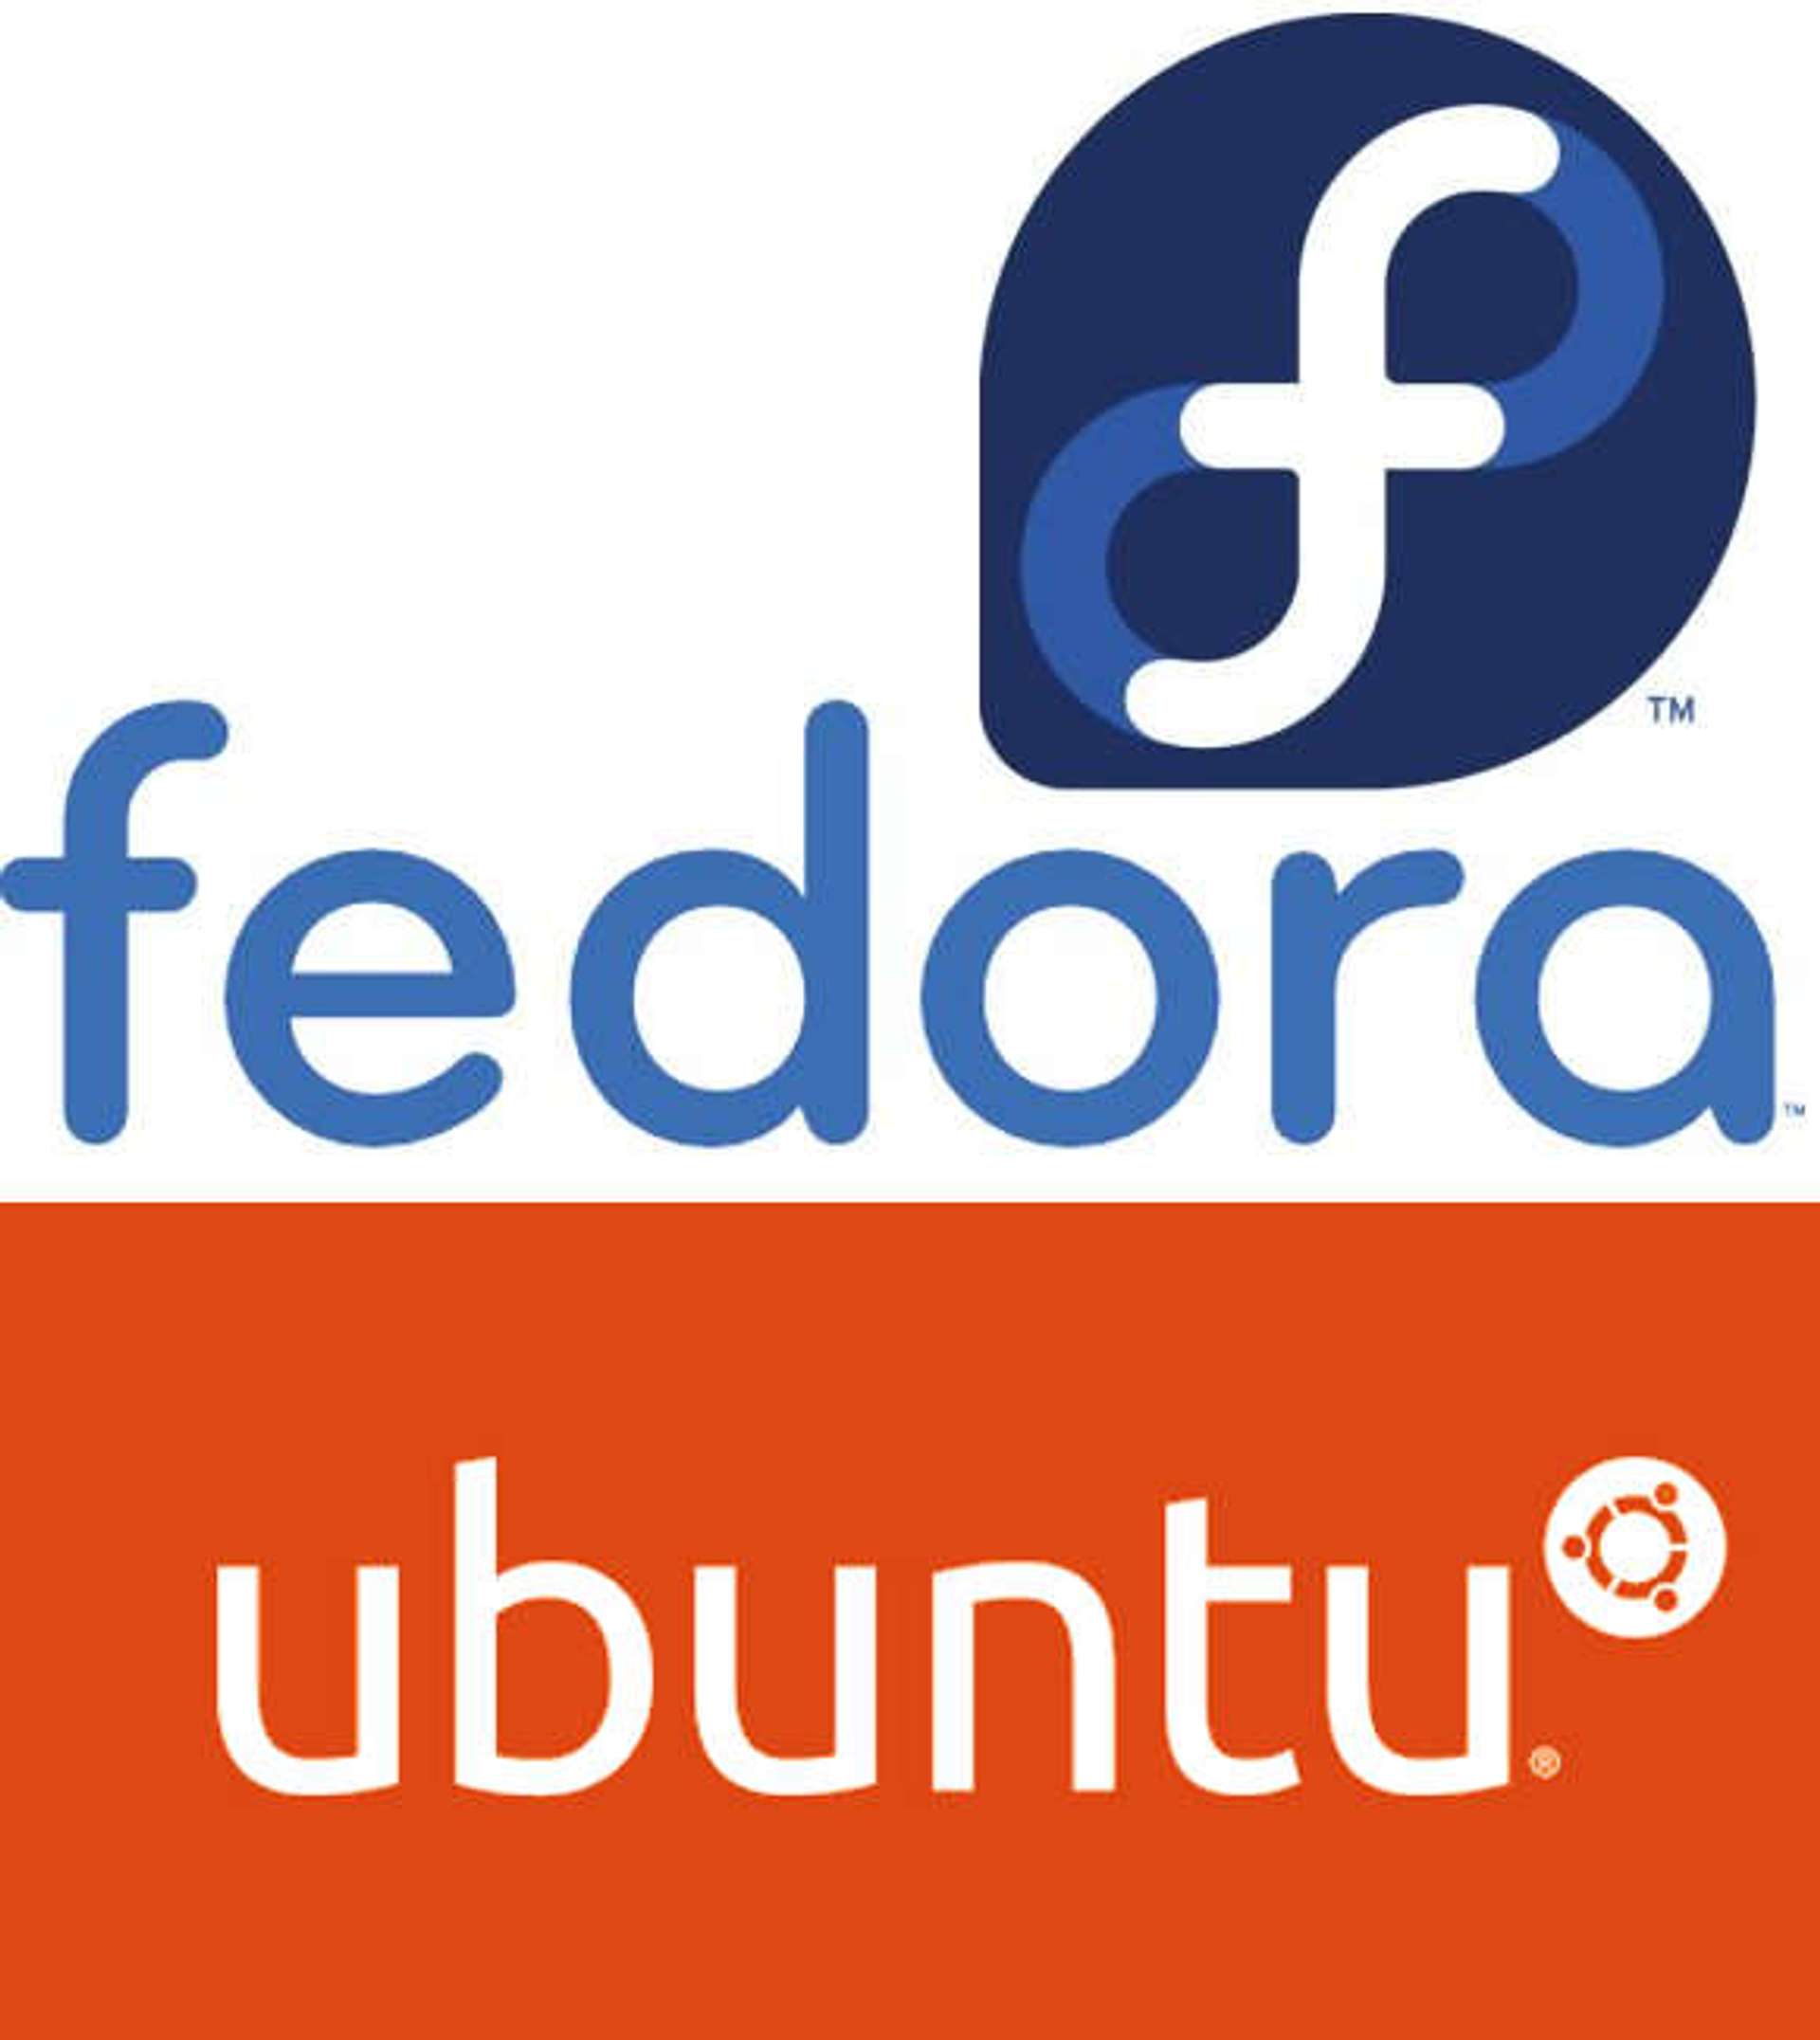 fedora ubuntu